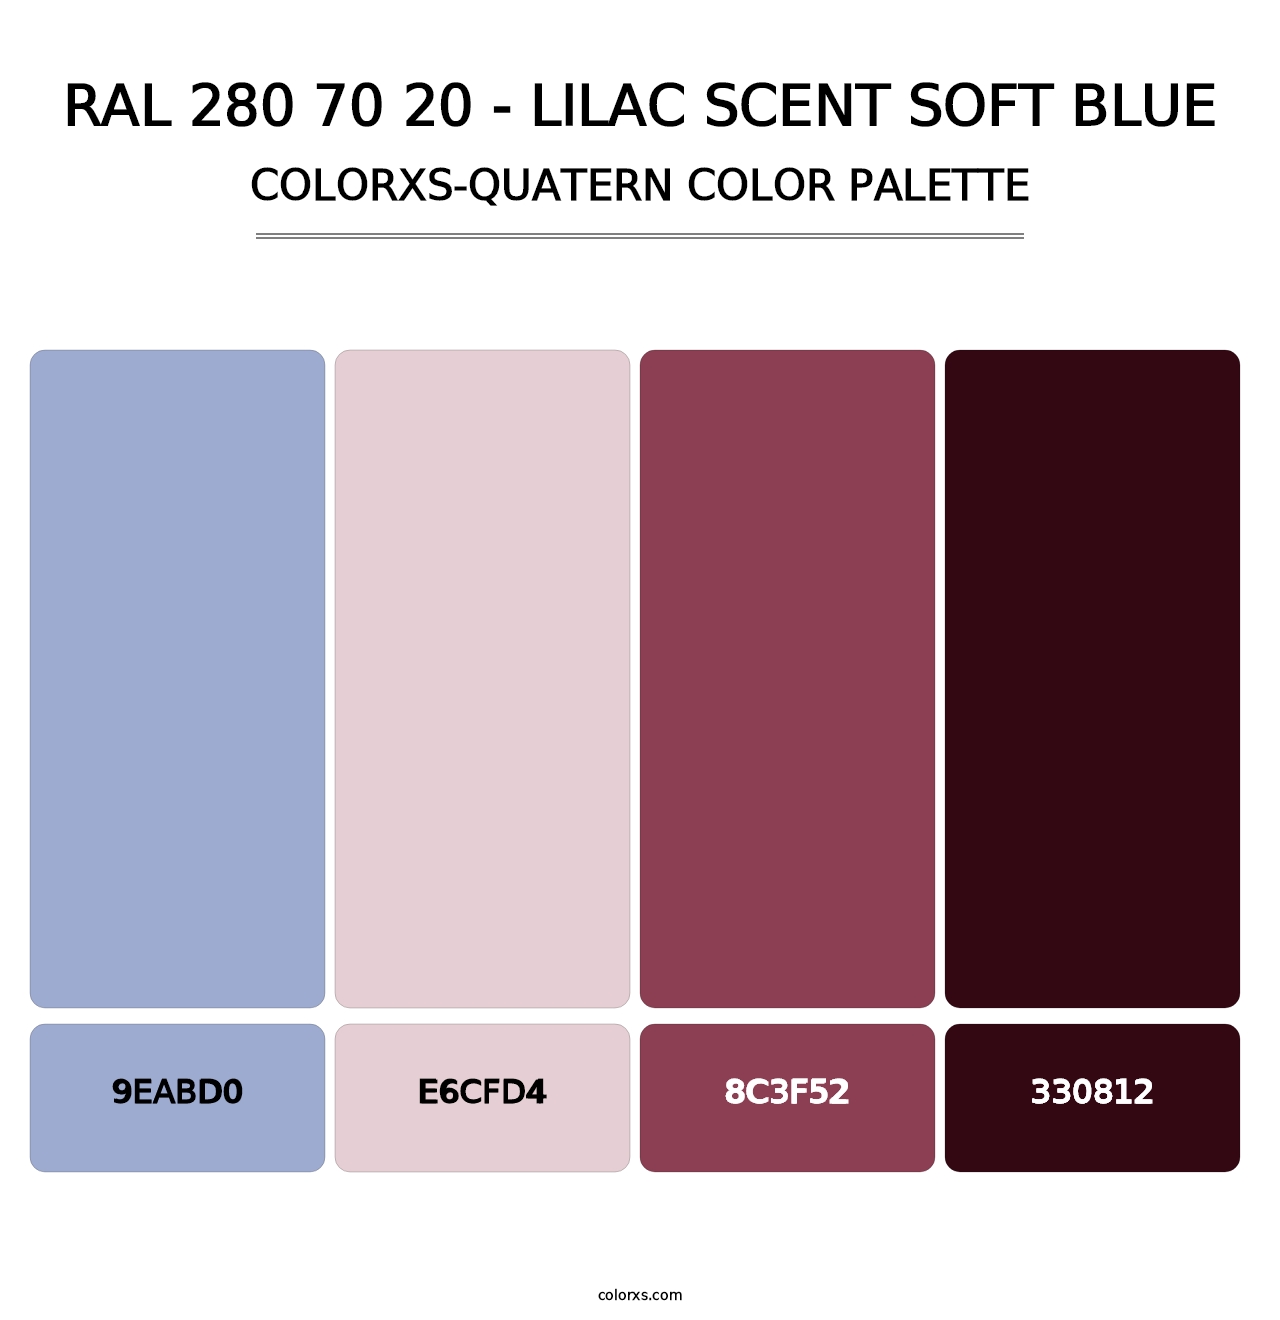 RAL 280 70 20 - Lilac Scent Soft Blue - Colorxs Quatern Palette